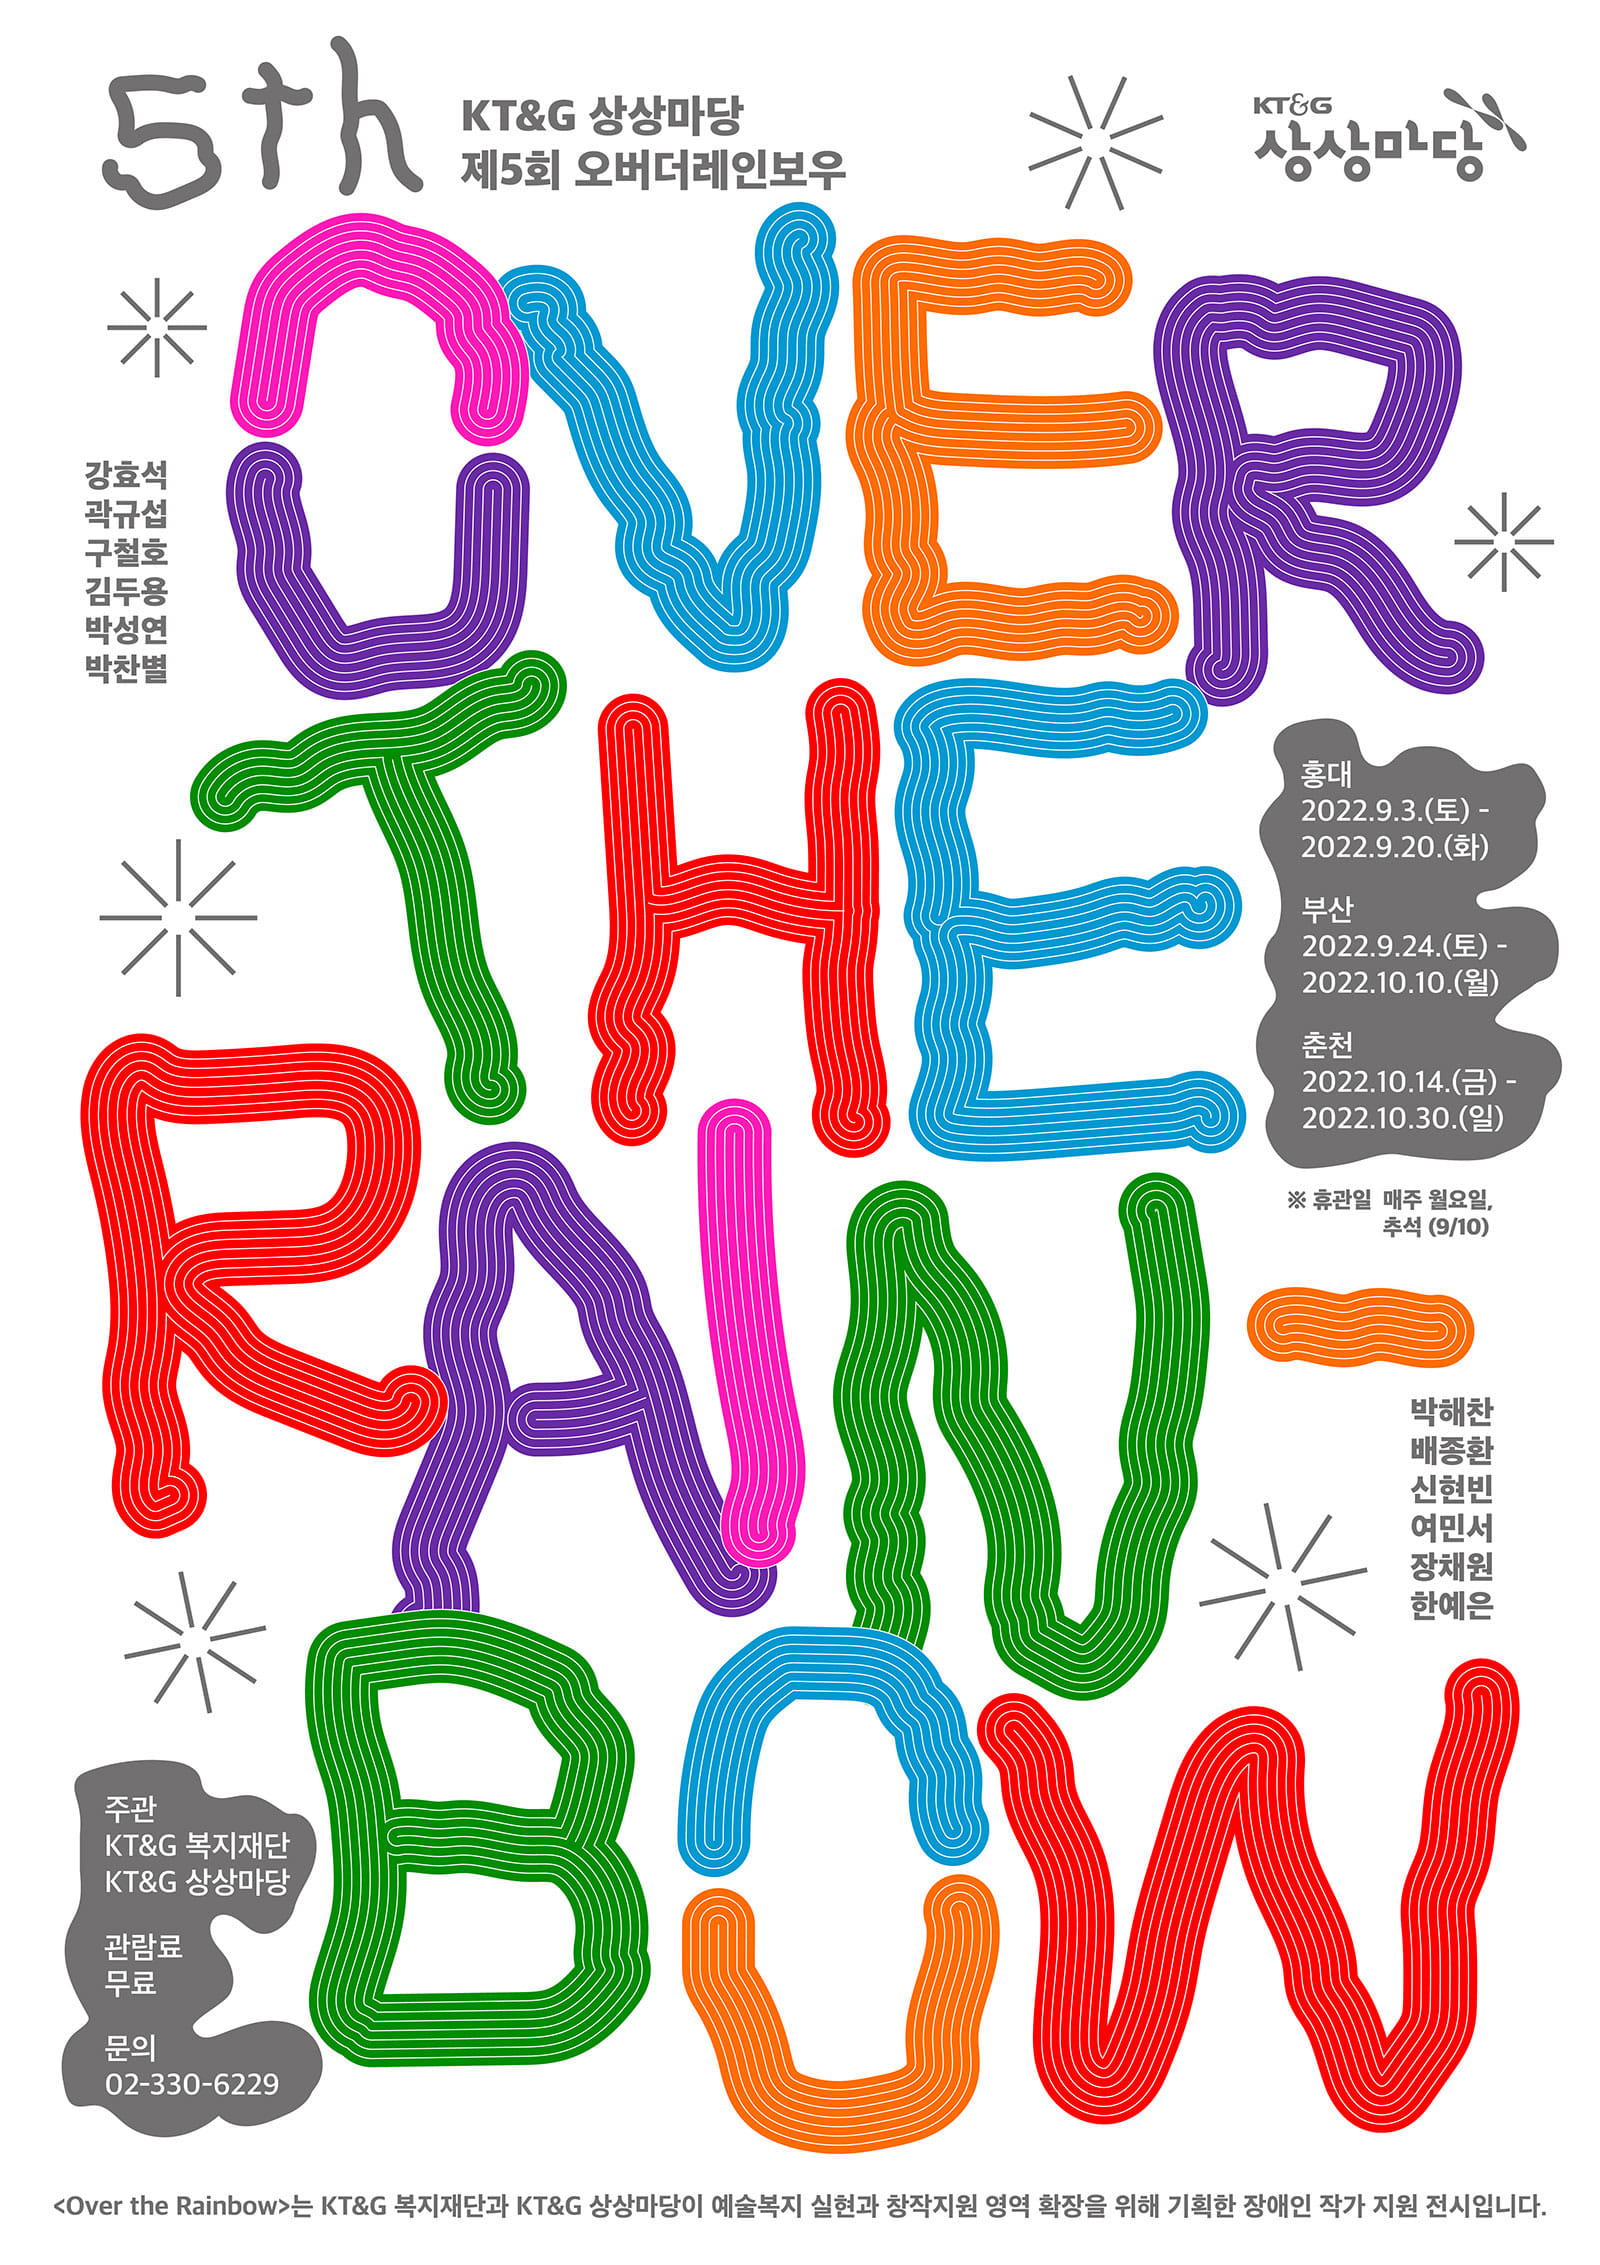 5th：Over the Rainbow